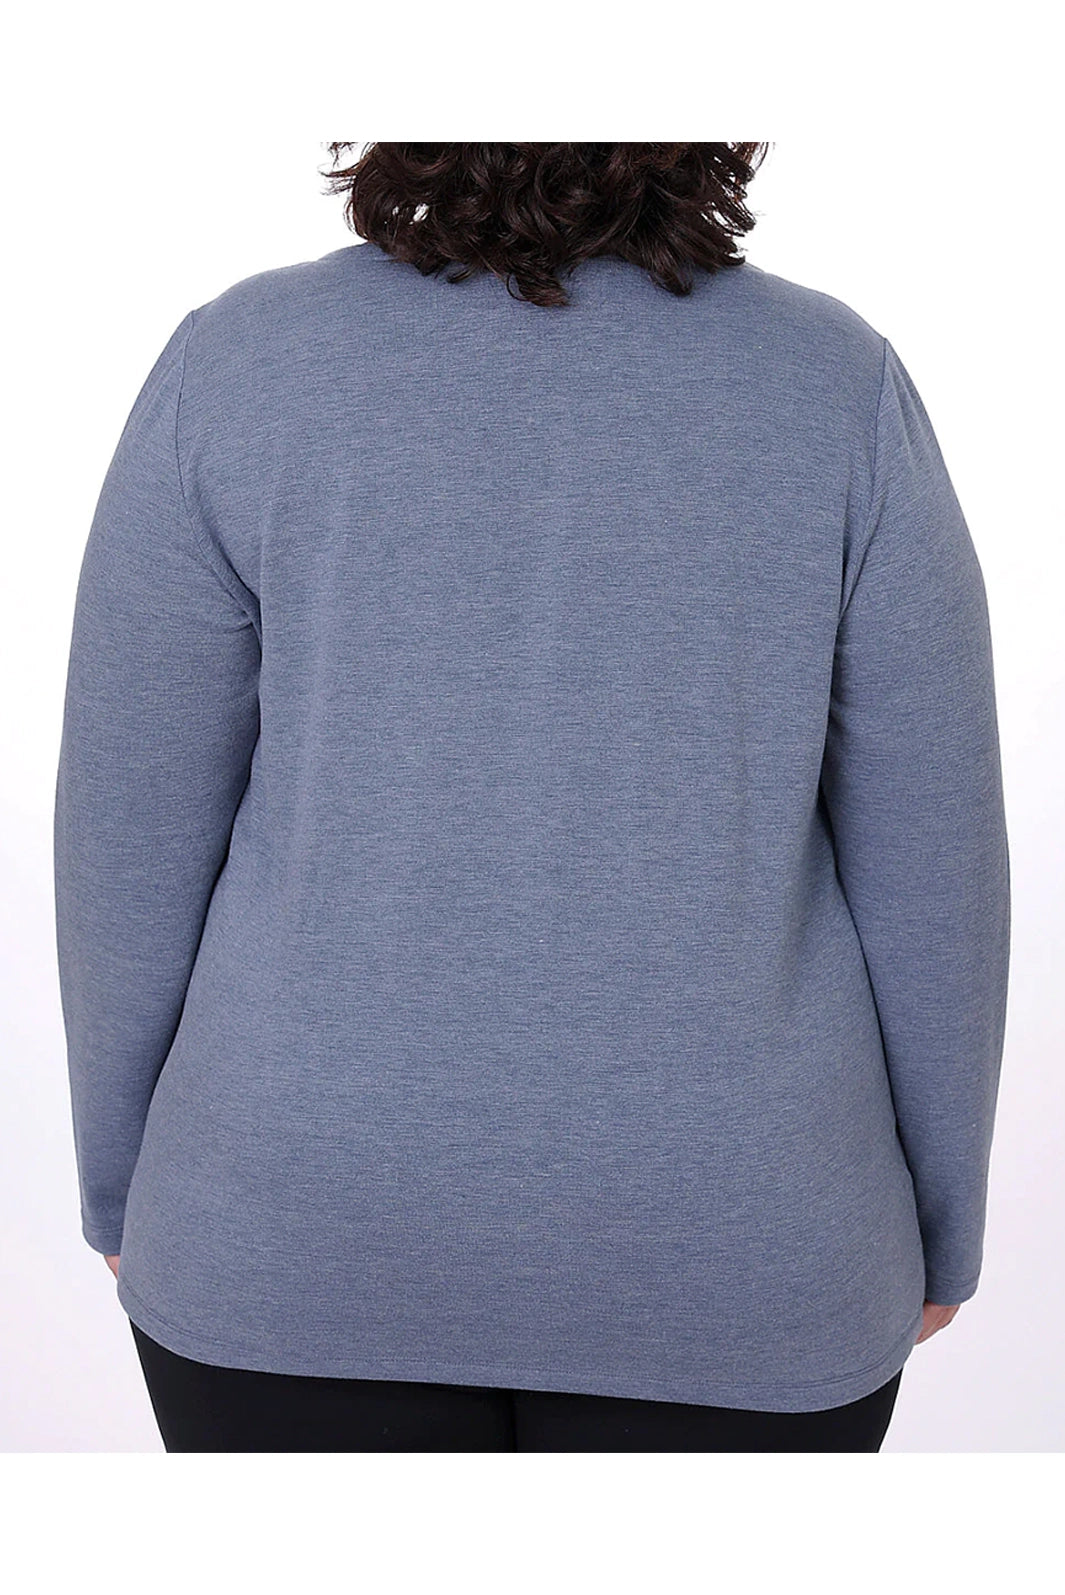 Plus Size Mistaya Long Sleeve Shirt by Sportive Plus*